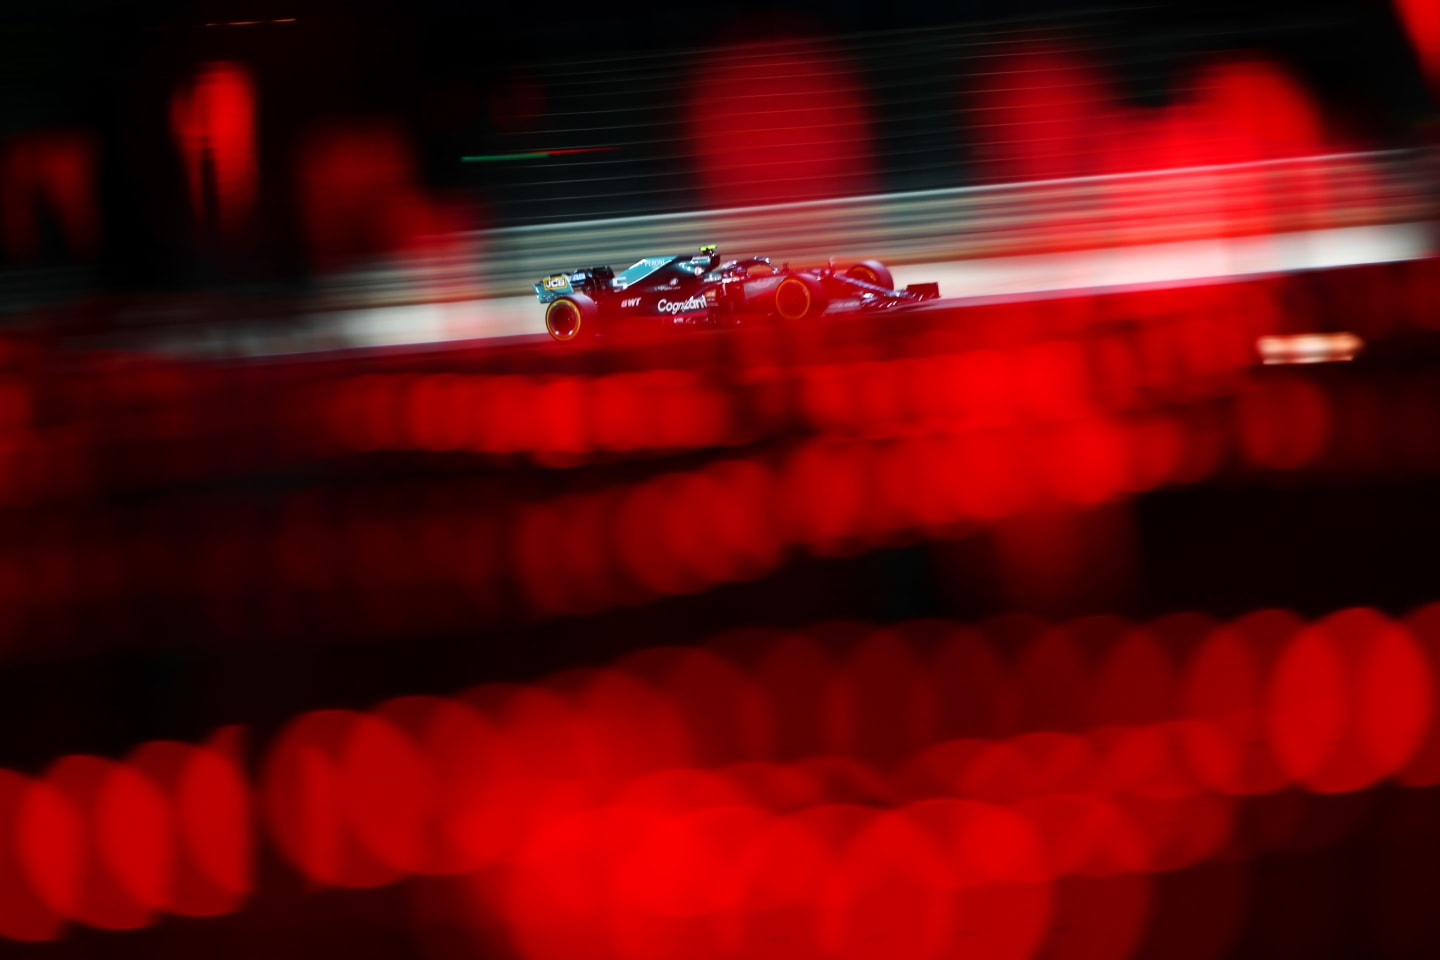 BAHRAIN, BAHRAIN - MARCH 26:  Sebastian Vettel of Germany driving the (5) Aston Martin AMR21 Mercedes during practice ahead of the F1 Grand Prix of Bahrain at Bahrain International Circuit on March 26, 2021 in Bahrain, Bahrain. (Photo by Dan Istitene - Formula 1/Formula 1 via Getty Images)